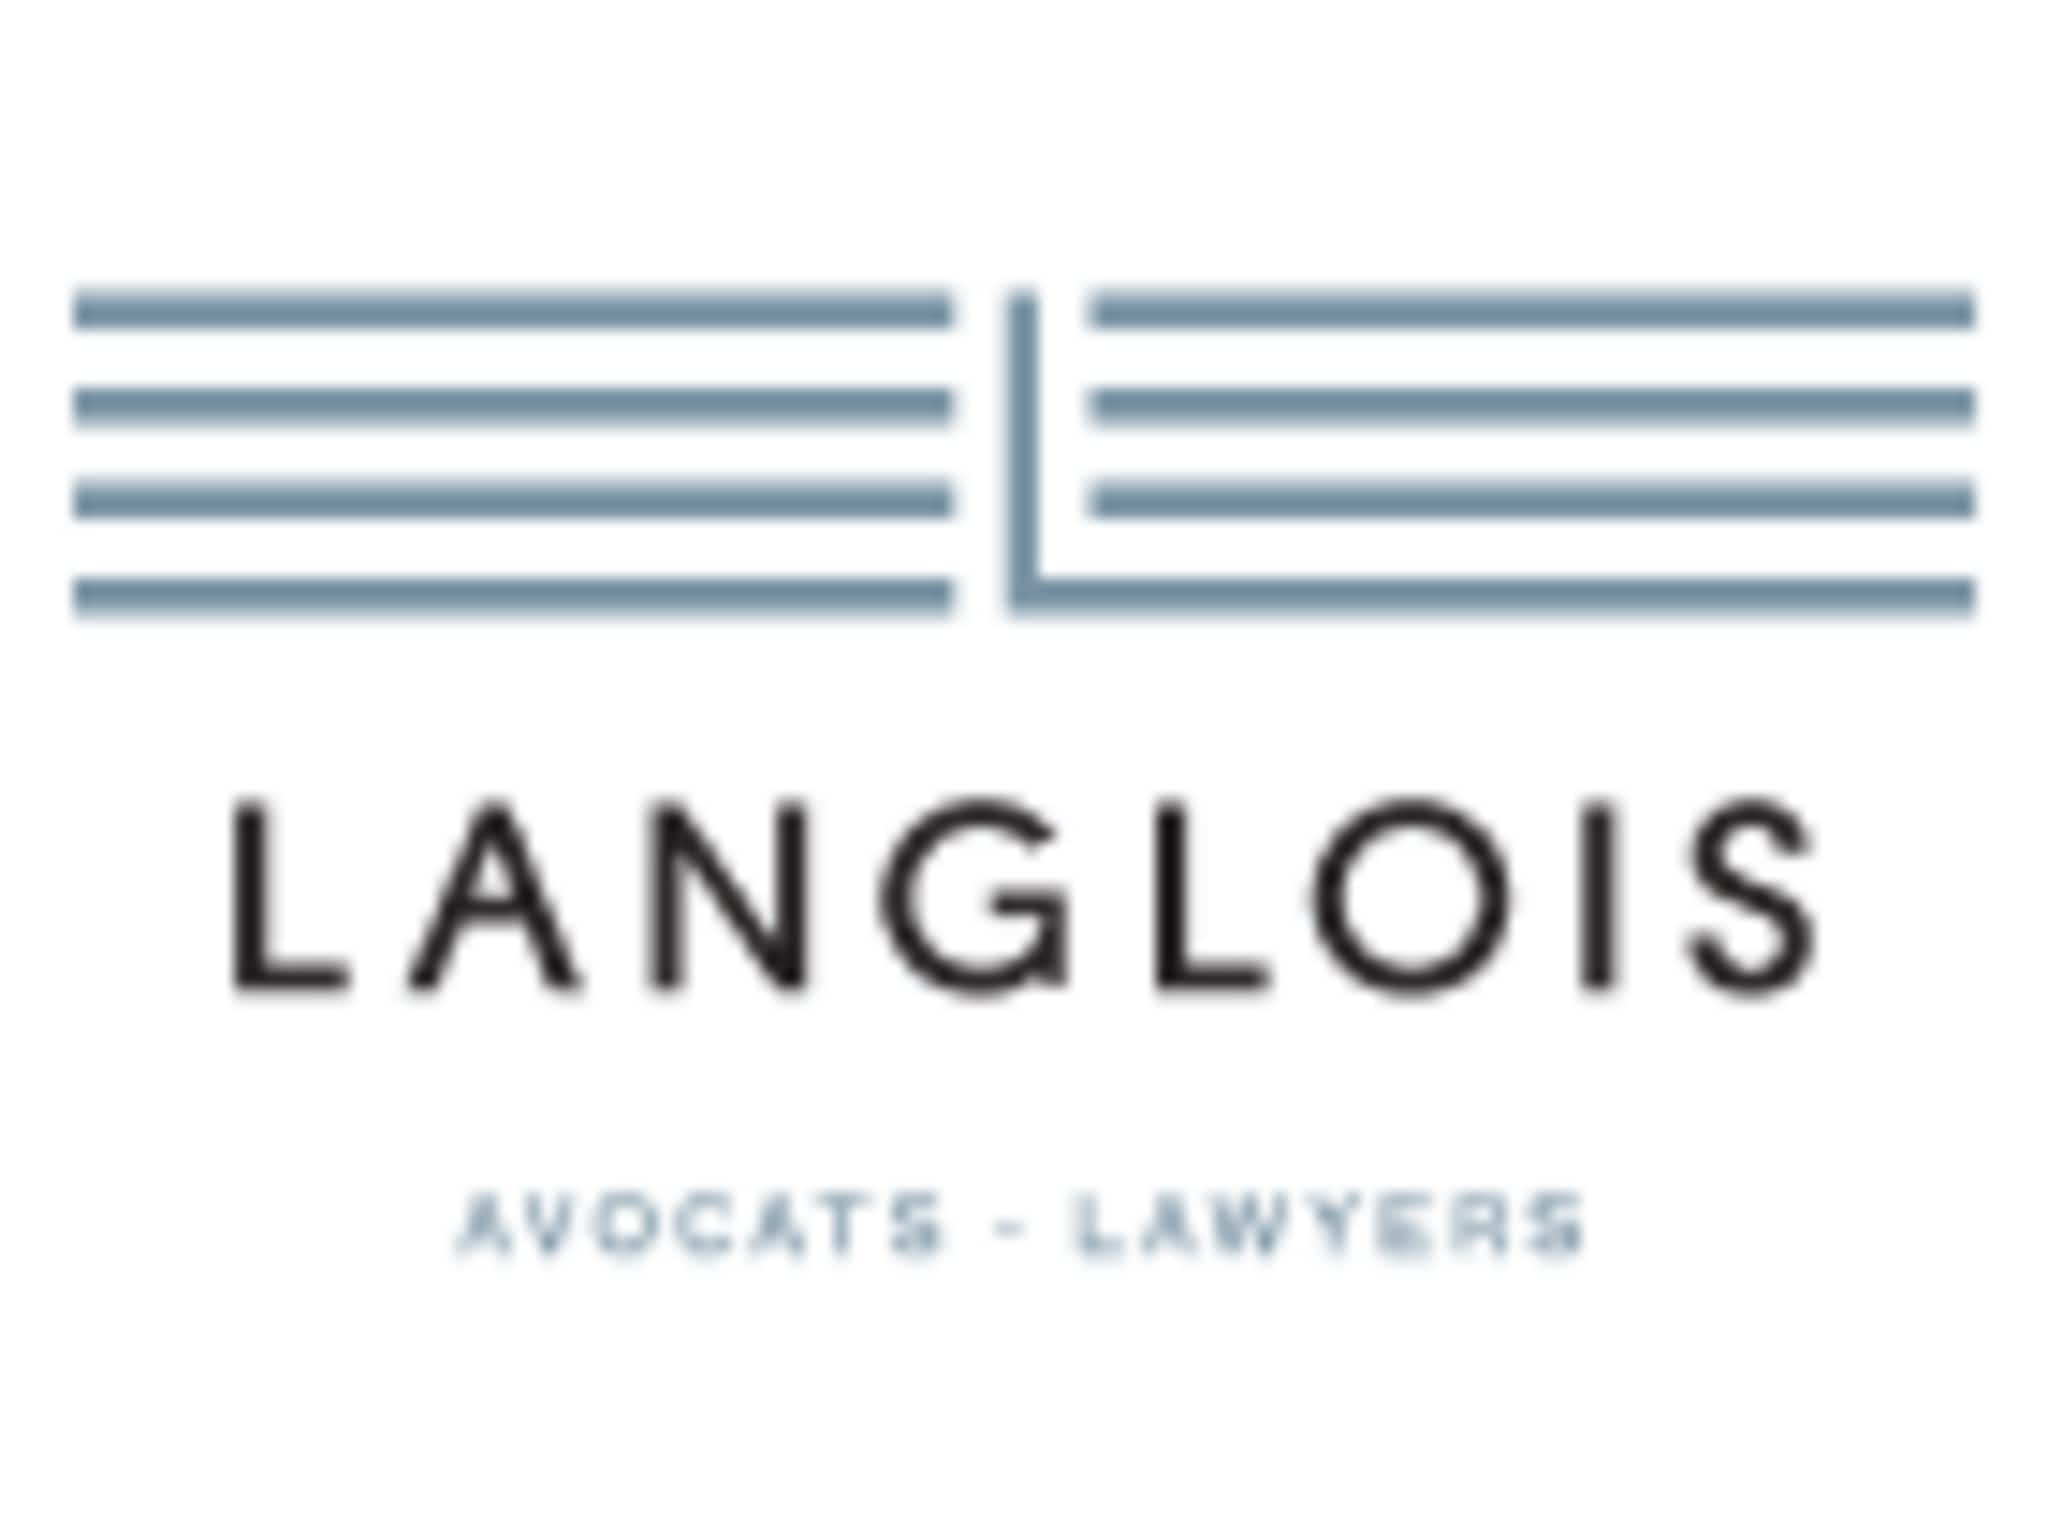 photo Langlois avocats - lawyers